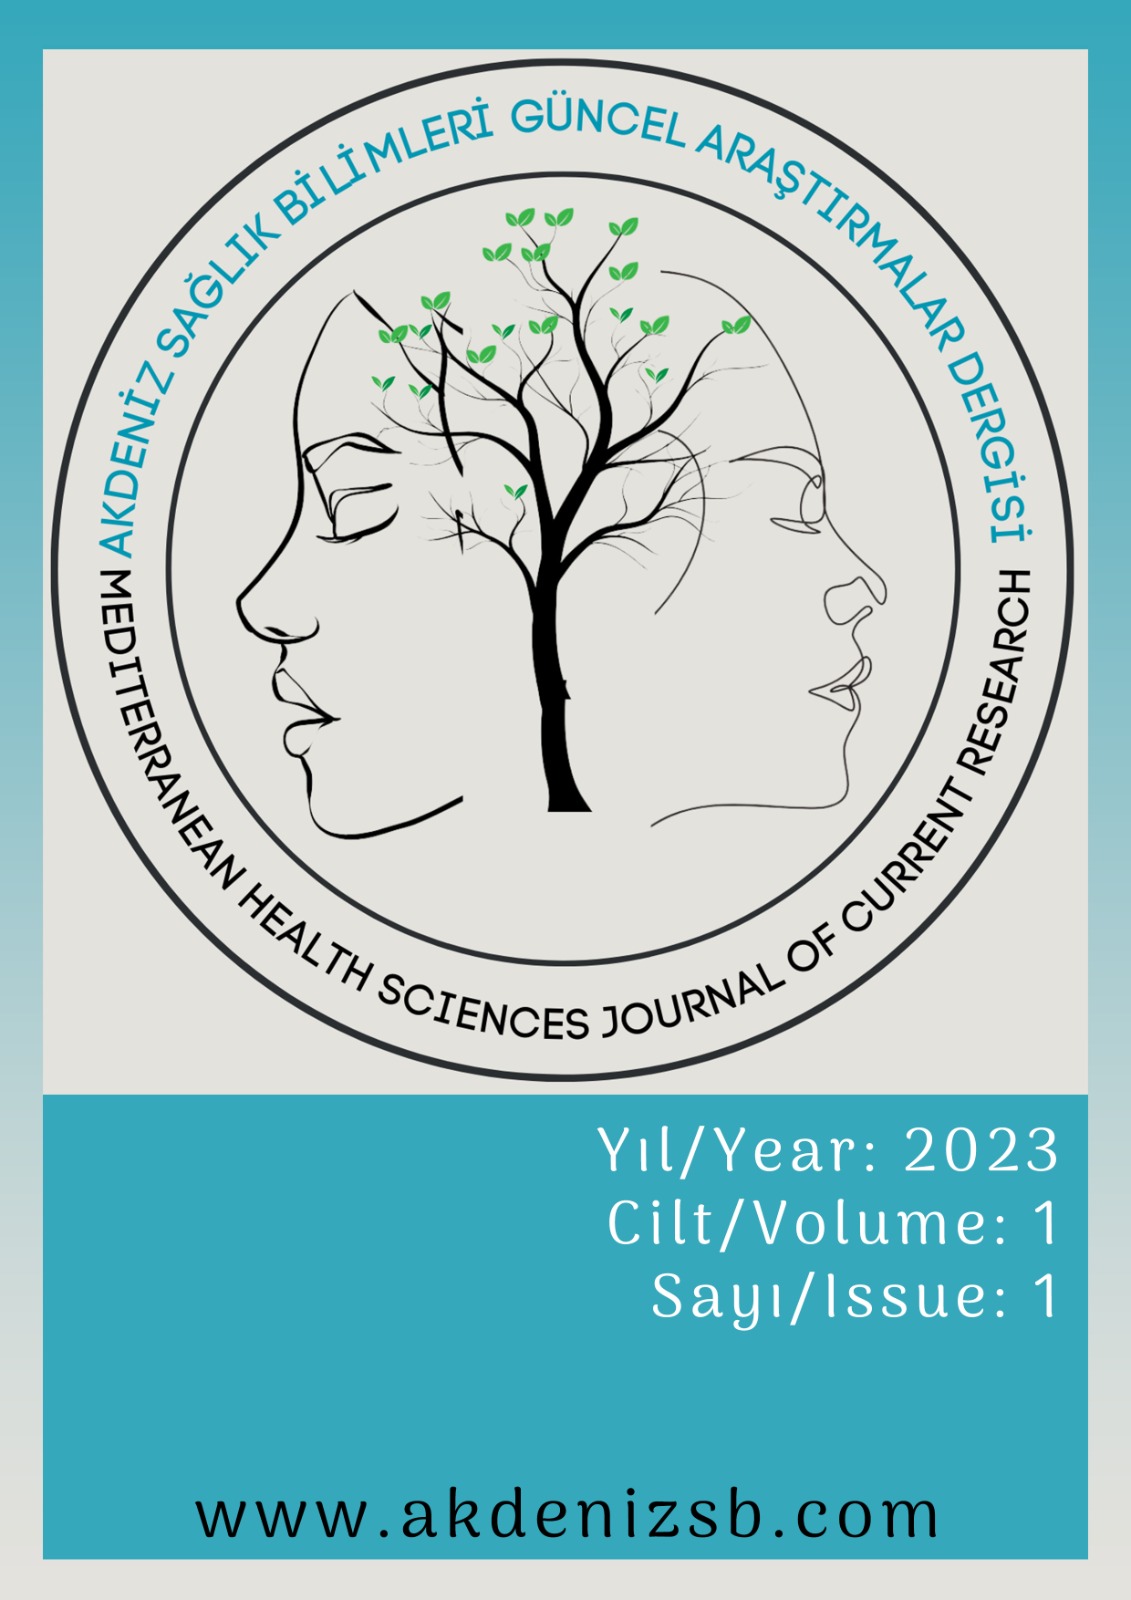 					Cilt 1 Sayı 1 (2023): Mediterranean Journal of Health Sciences and Current Research (MHSCR) Gör
				